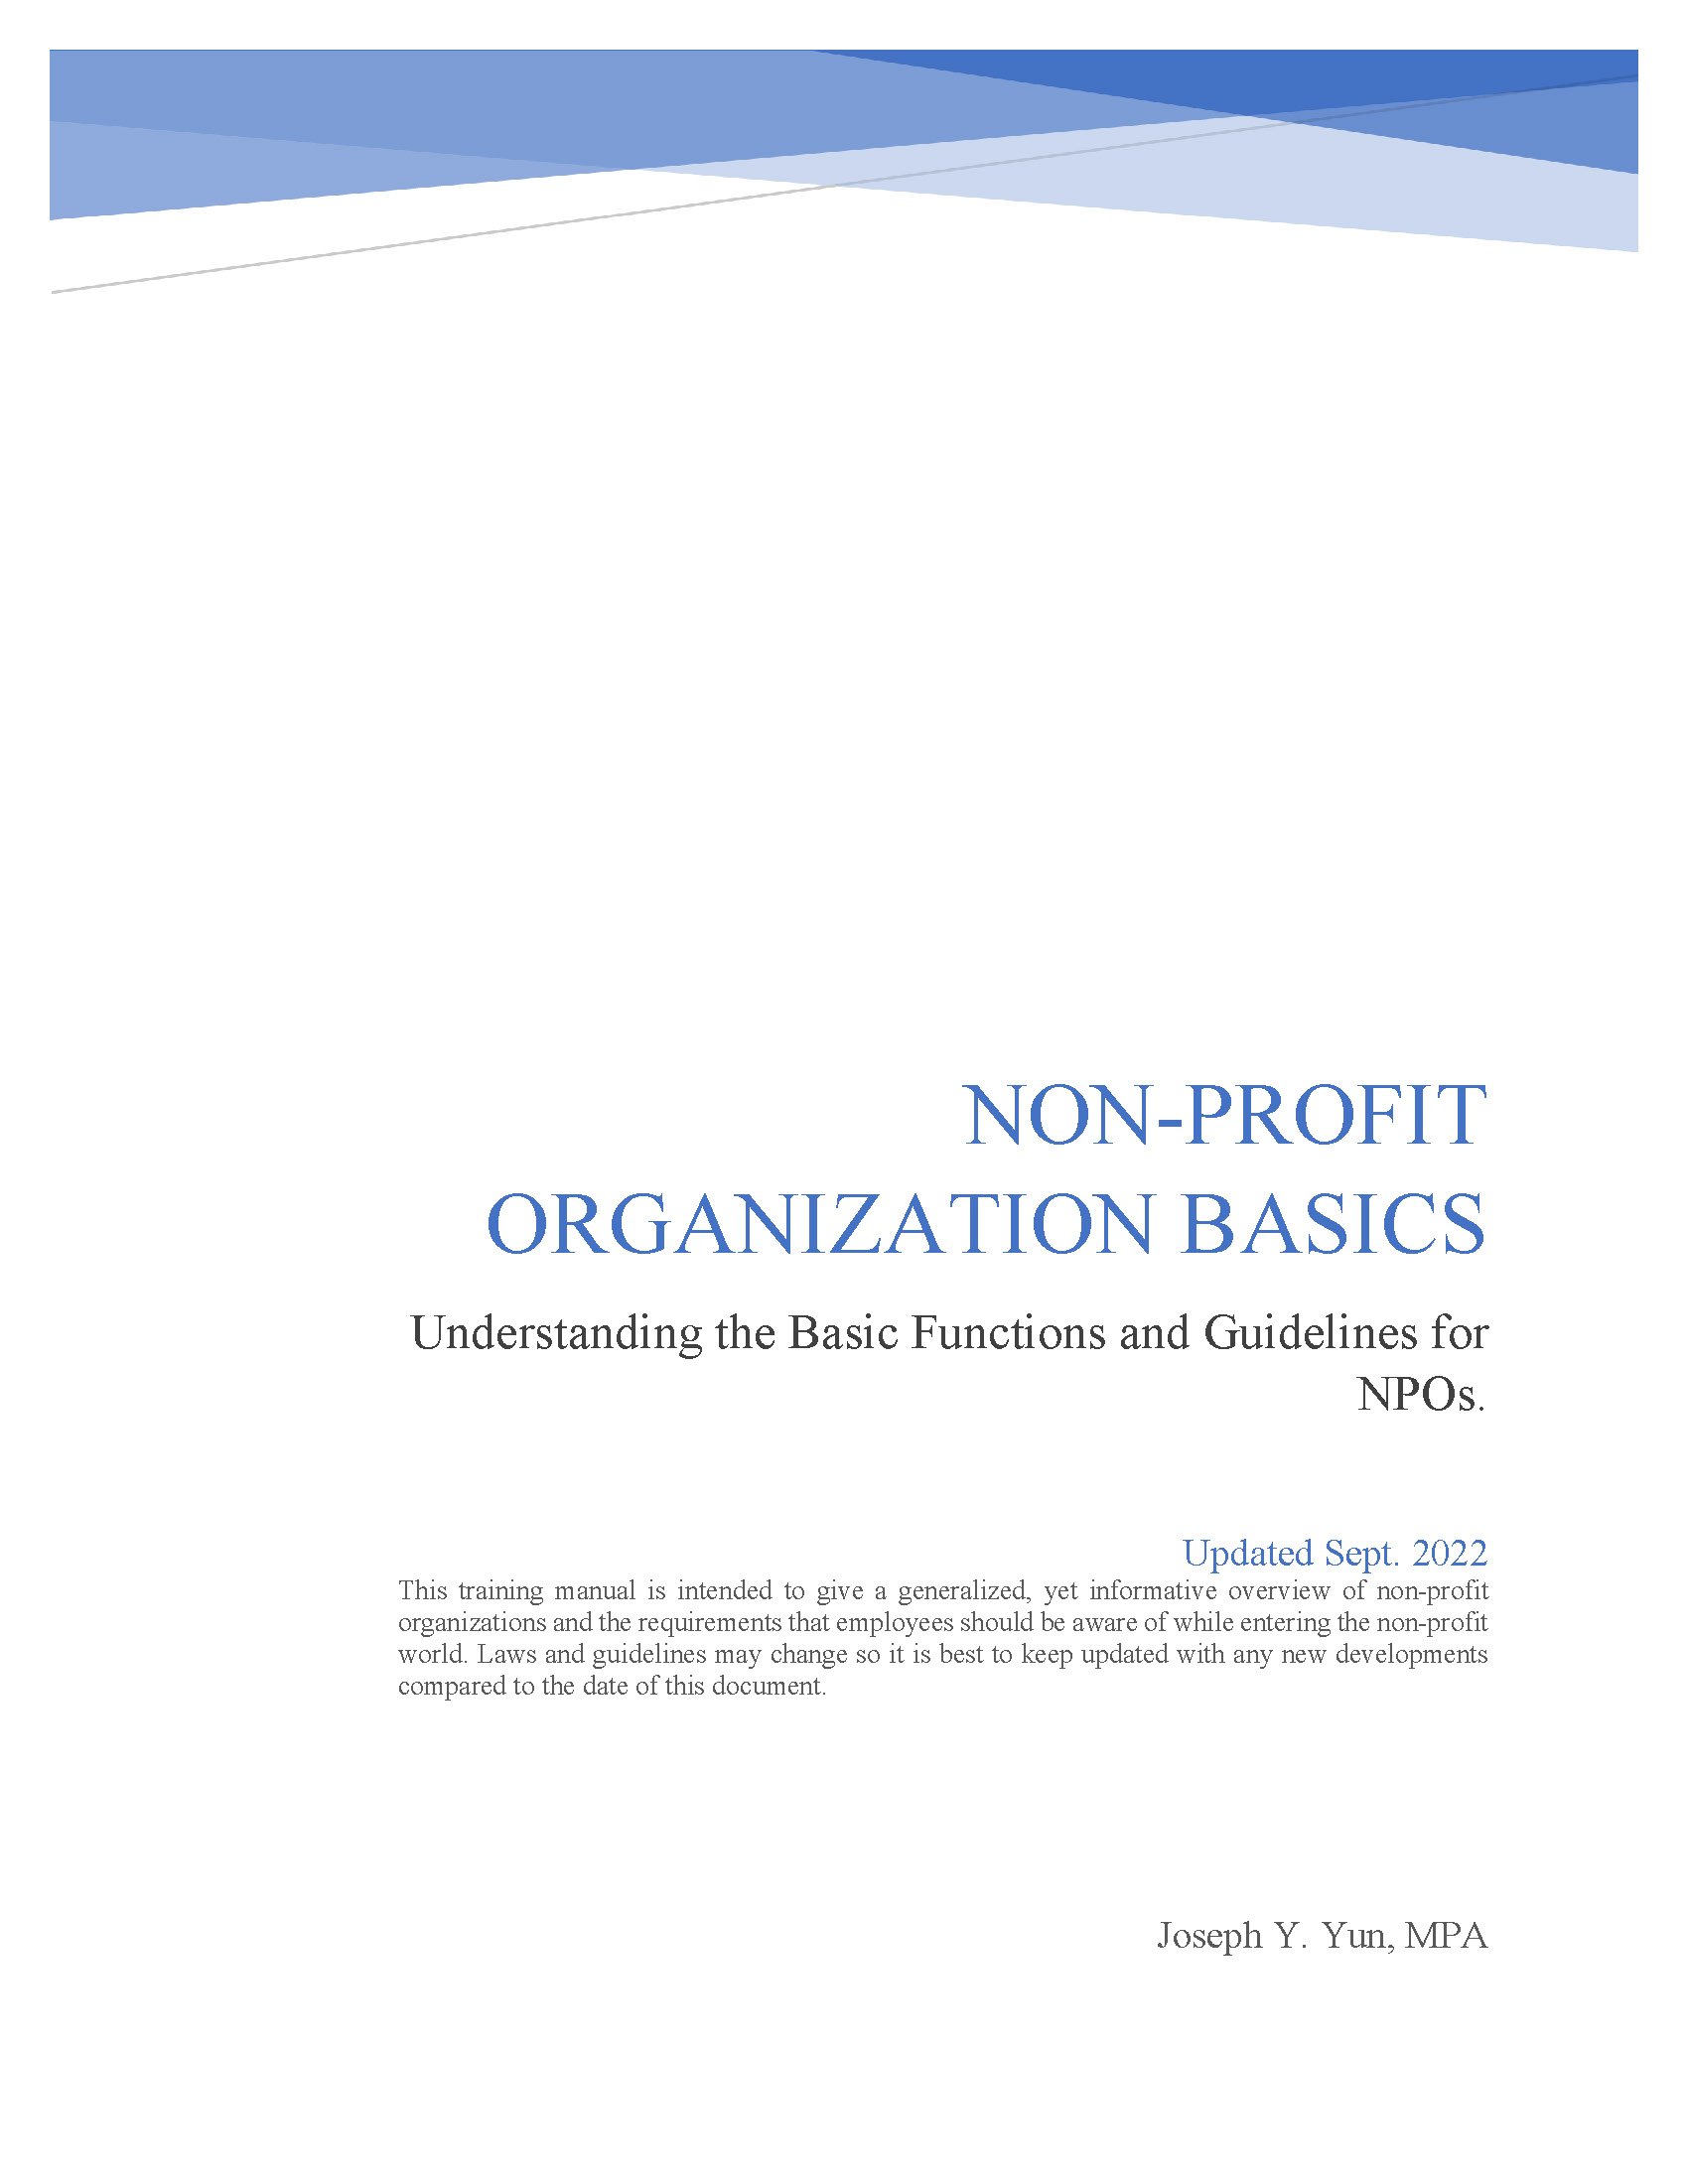 Non-Profit Organization Basics Sept 2022 by Joseph Y. Yun_Page_01.jpg